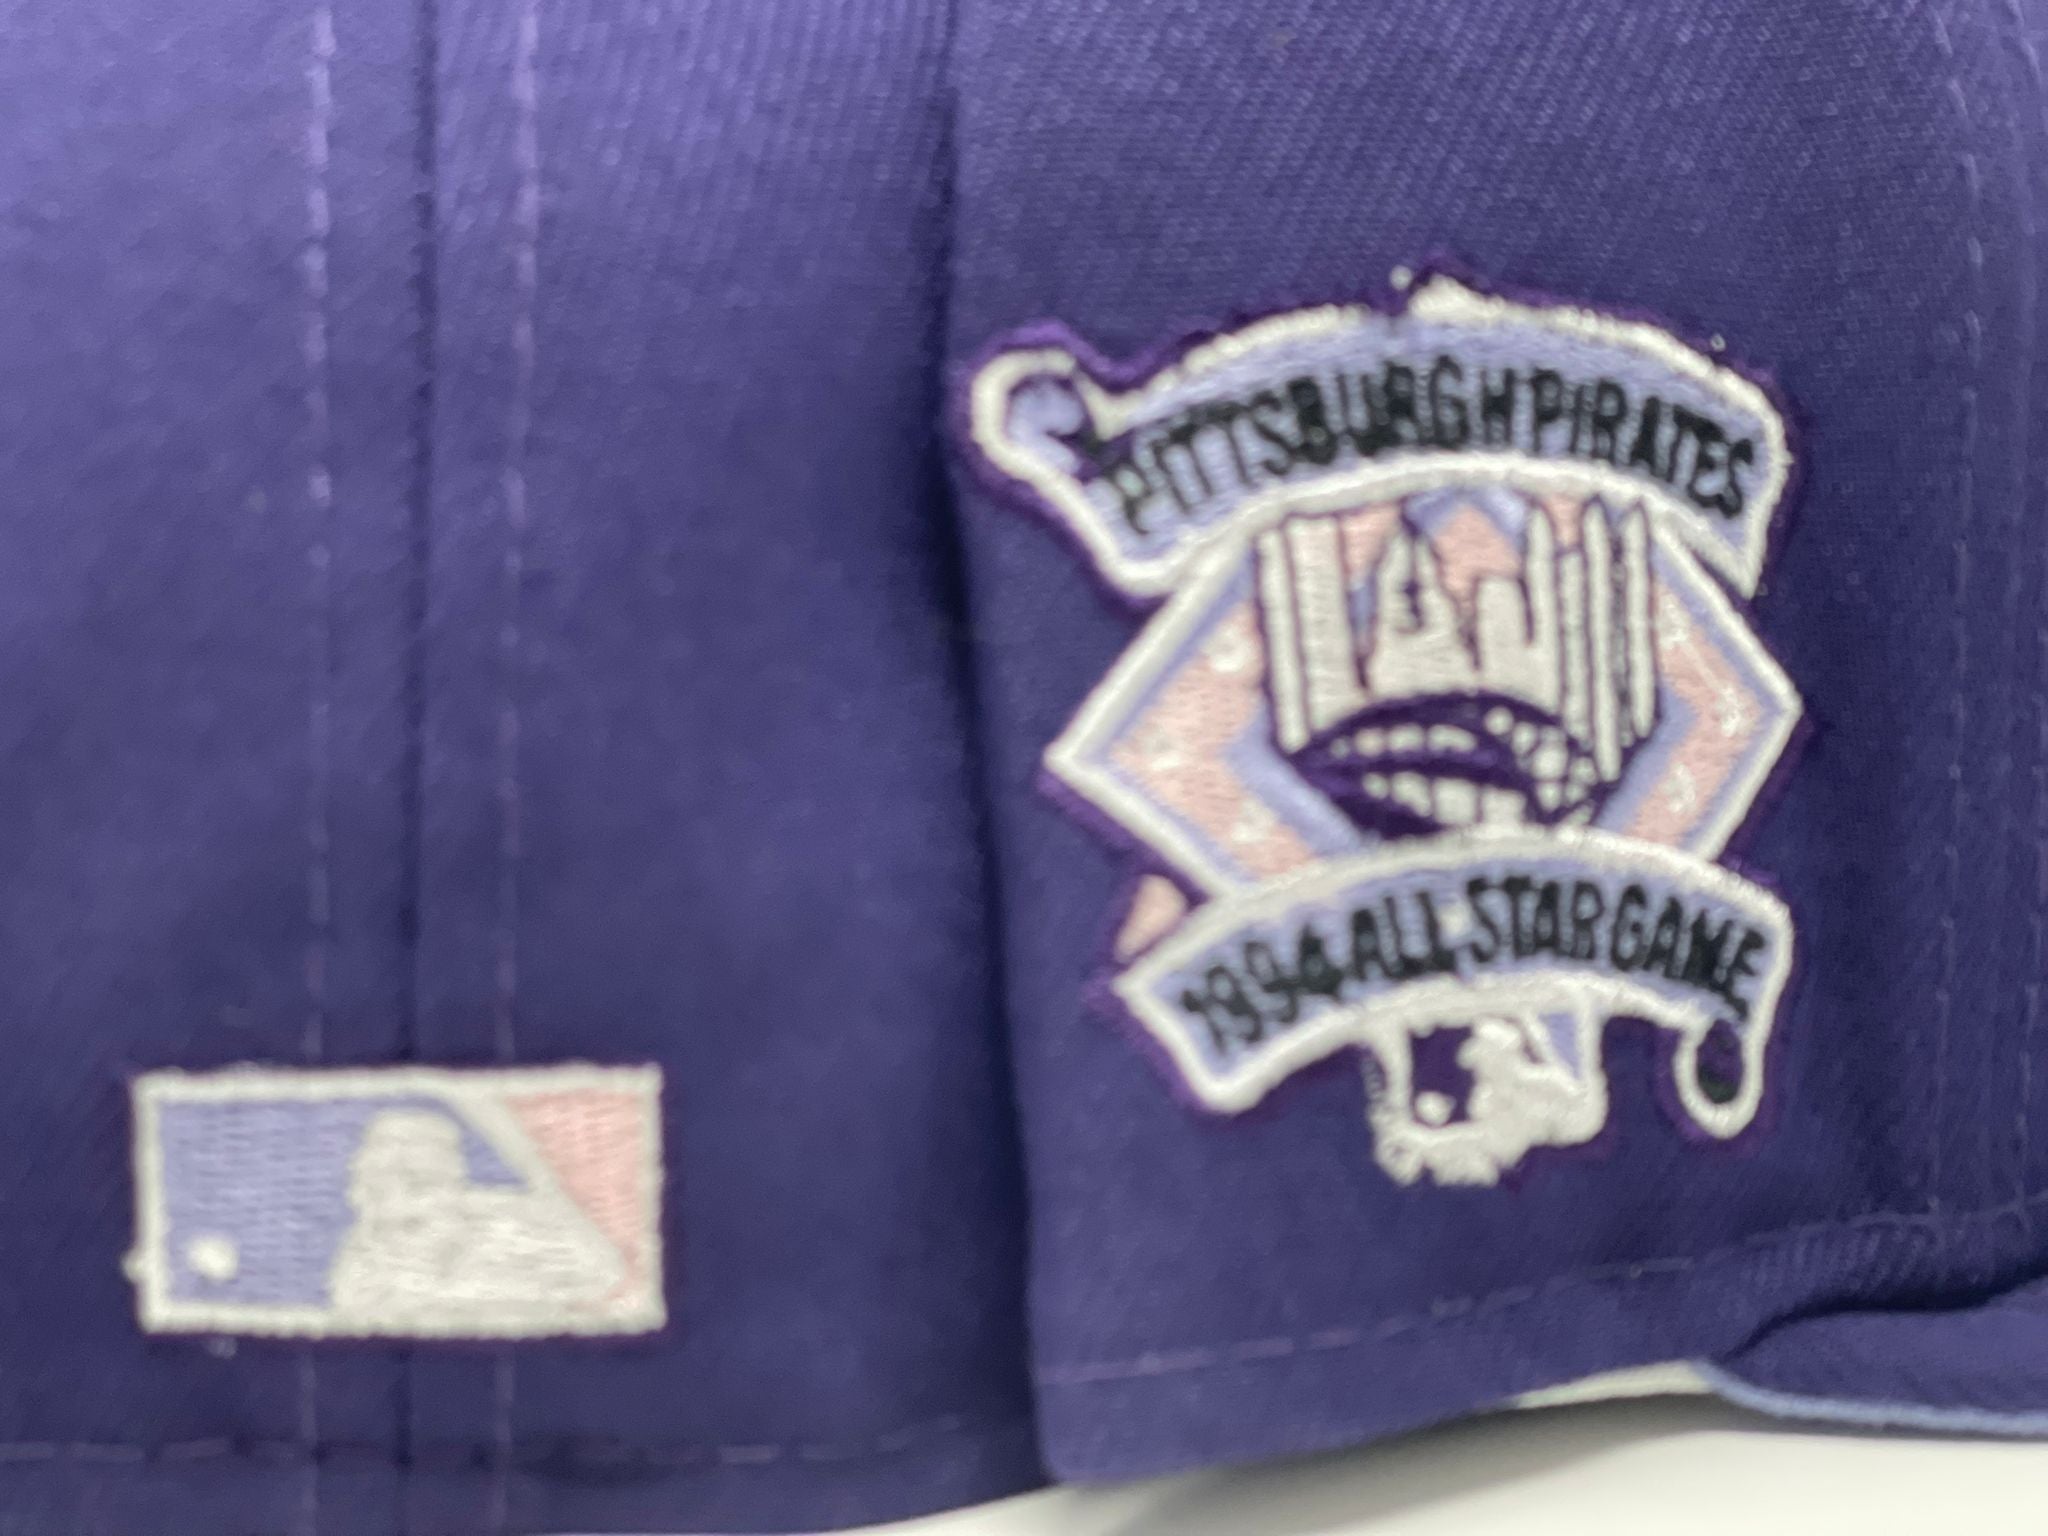 Pittsburgh Pirates: 1994 MLB All-Star Game 1/4 Zip Starter Dugout Jack –  National Vintage League Ltd.